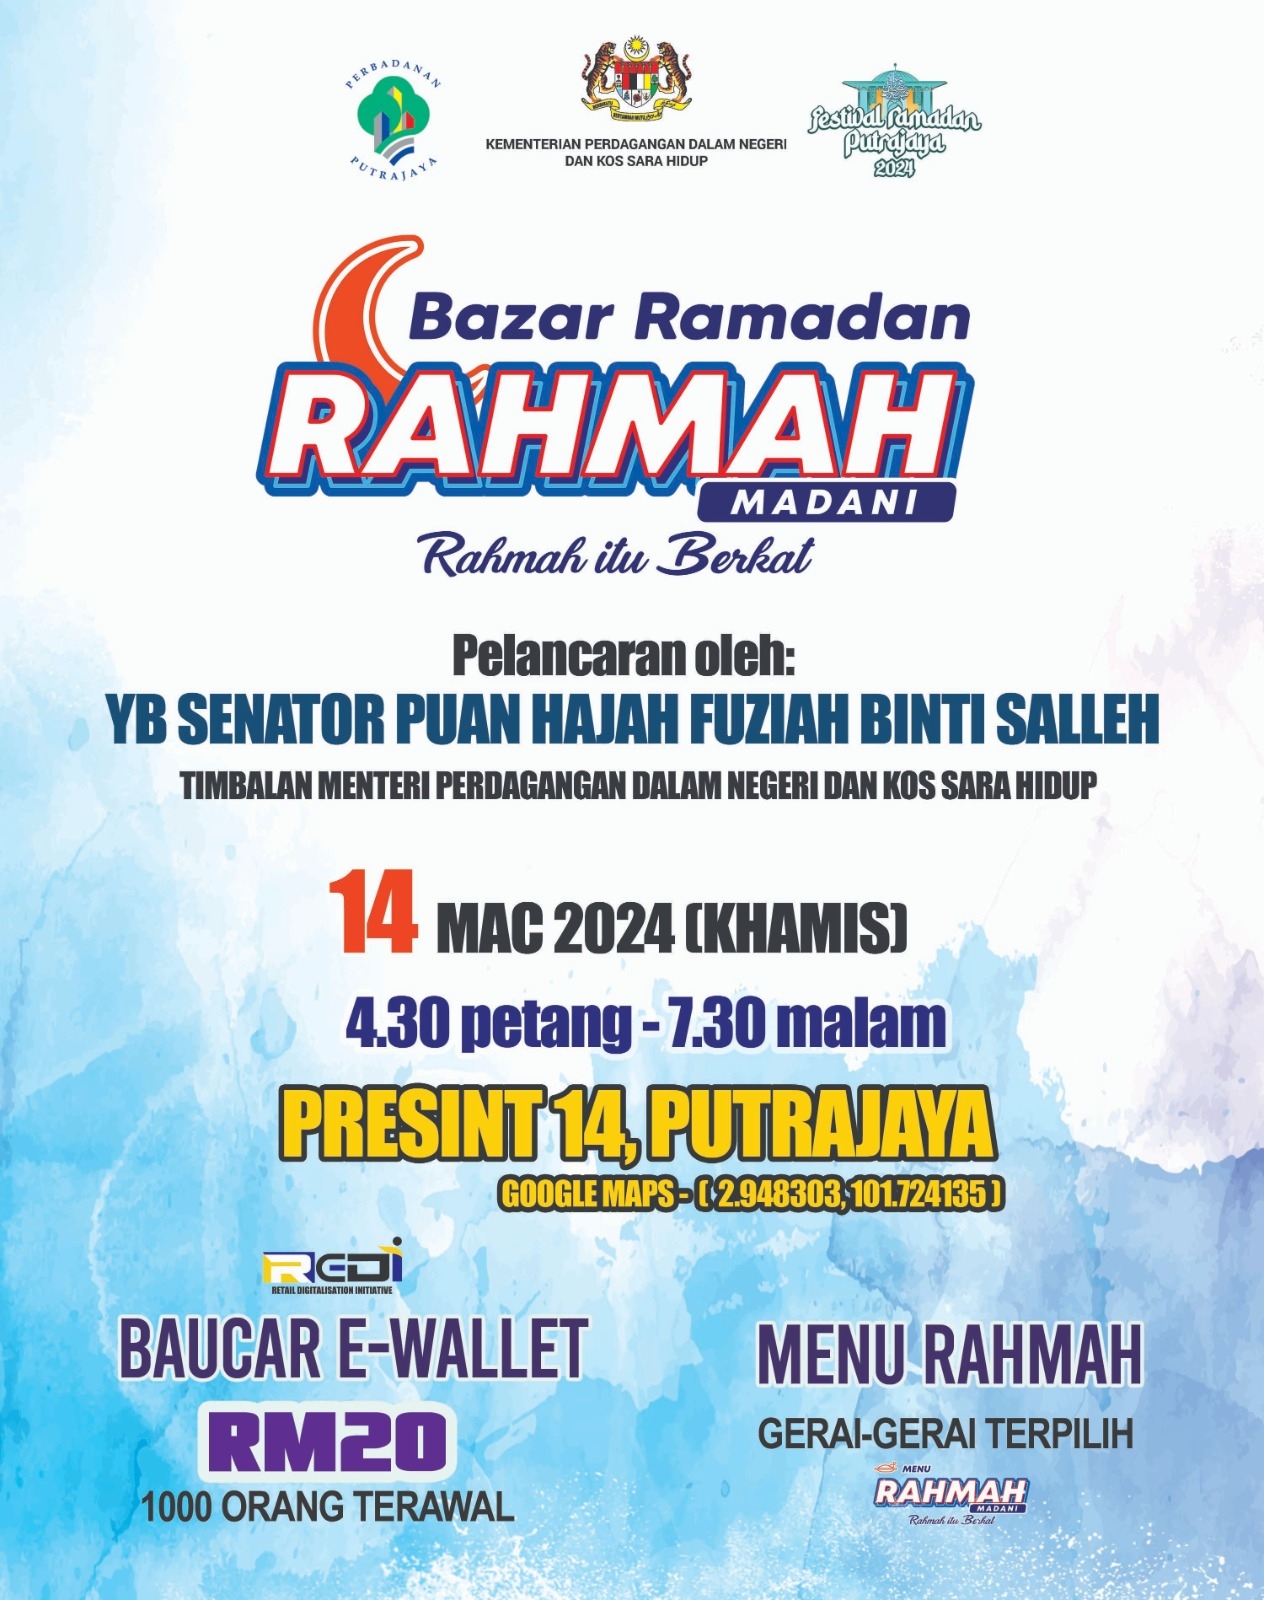 bazar ramadan rahmah madani original